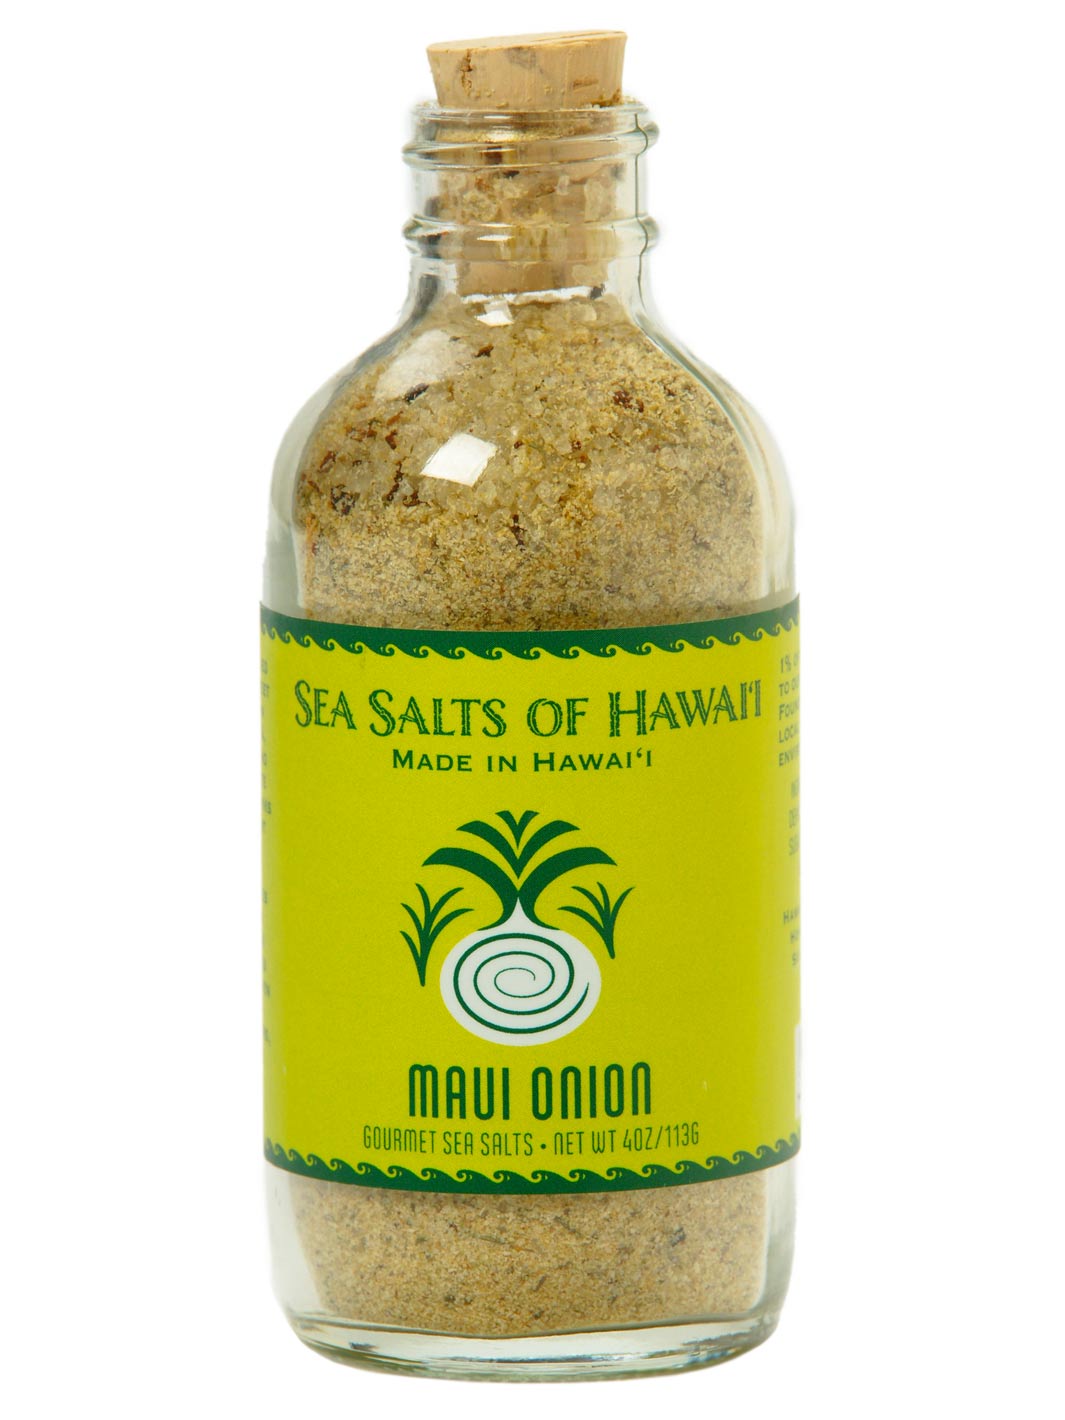 Maui Onion Hawaiian Sea Salt Blend - 4 ounce bottle